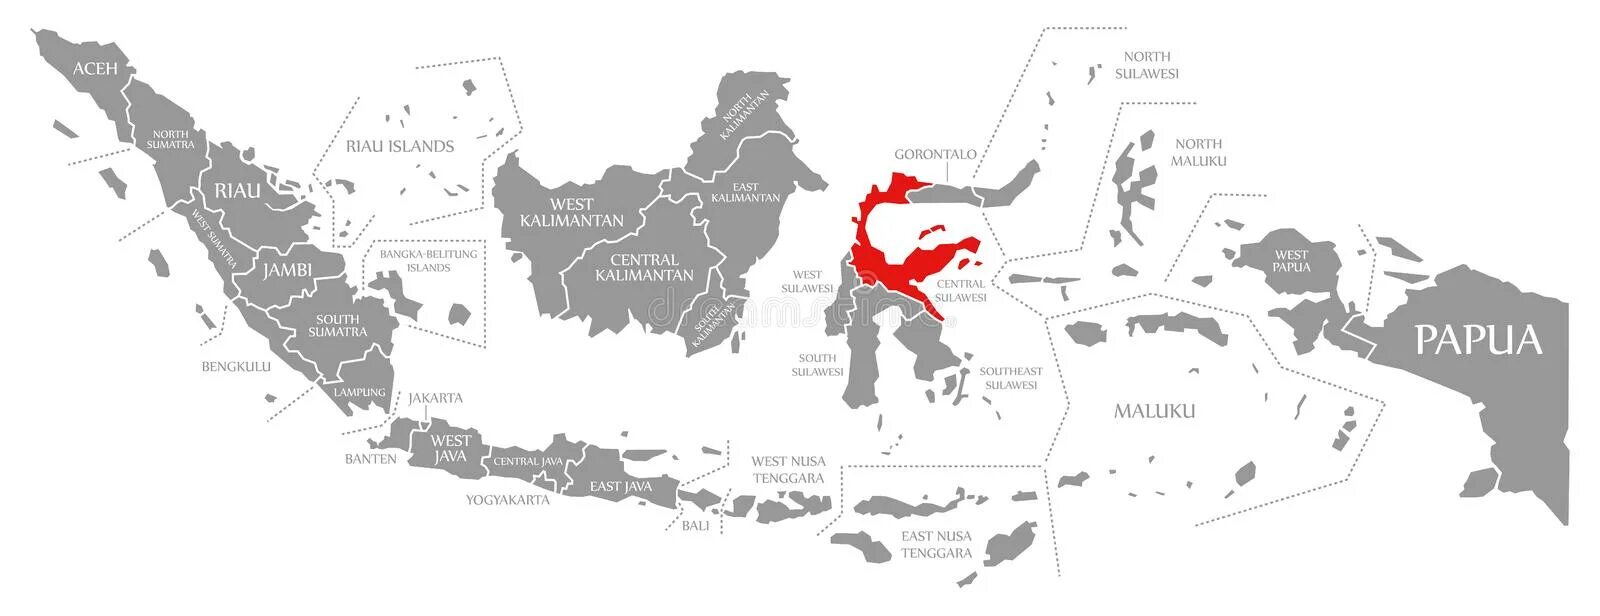 Карта Индонезии контур. Индонезия на карте. Карта Индонезии белая. Провинции Индонезии на карте.